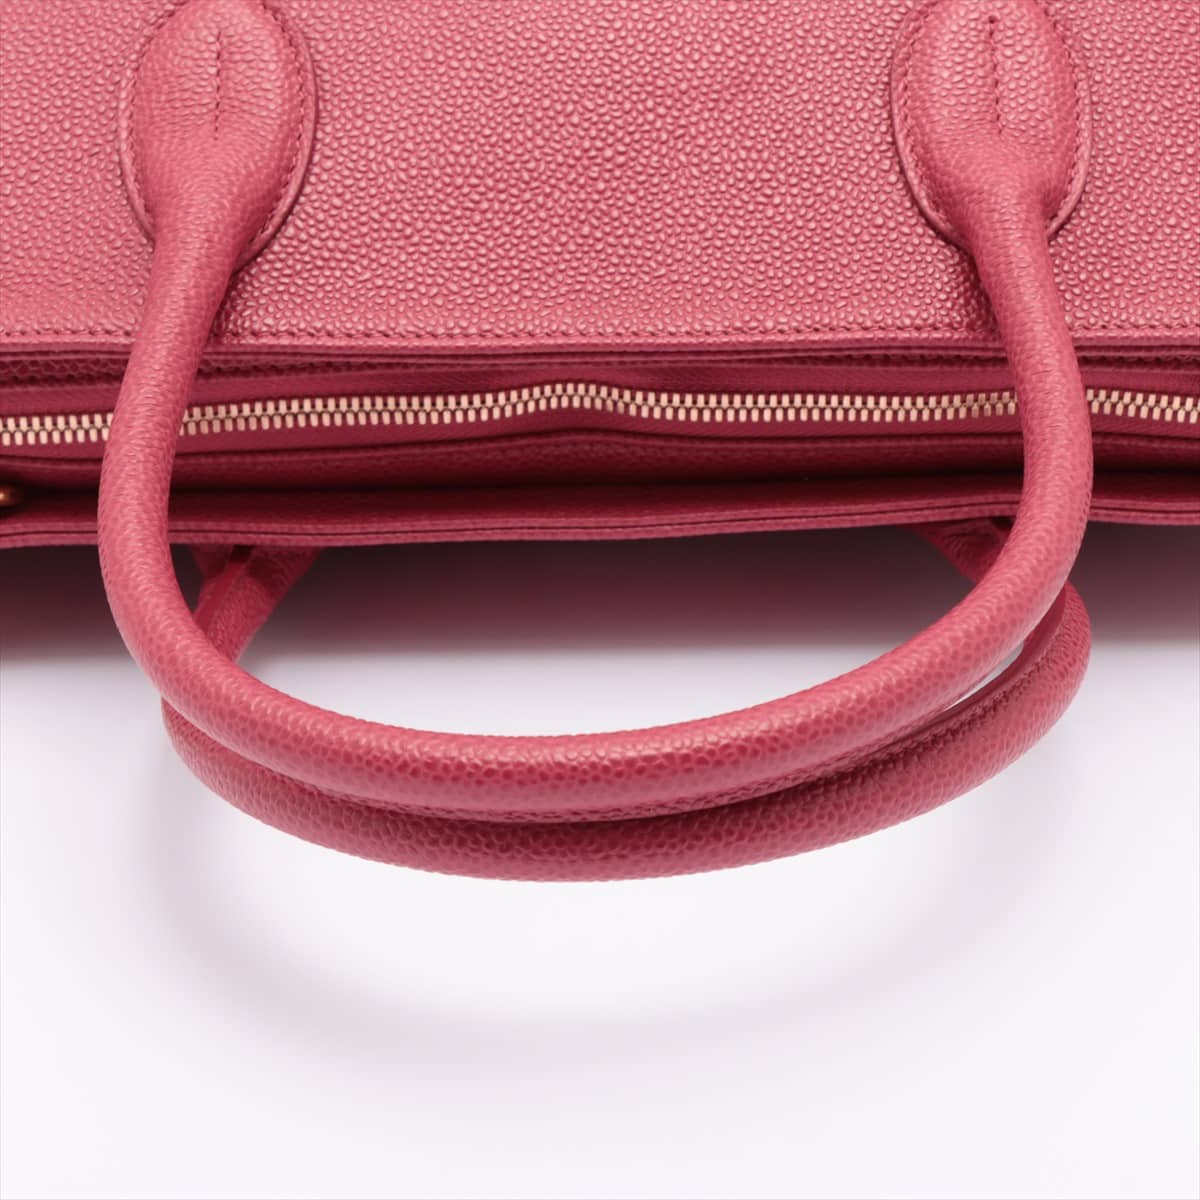 Chopard Napoli mini Leather 2 way tote bag Pink